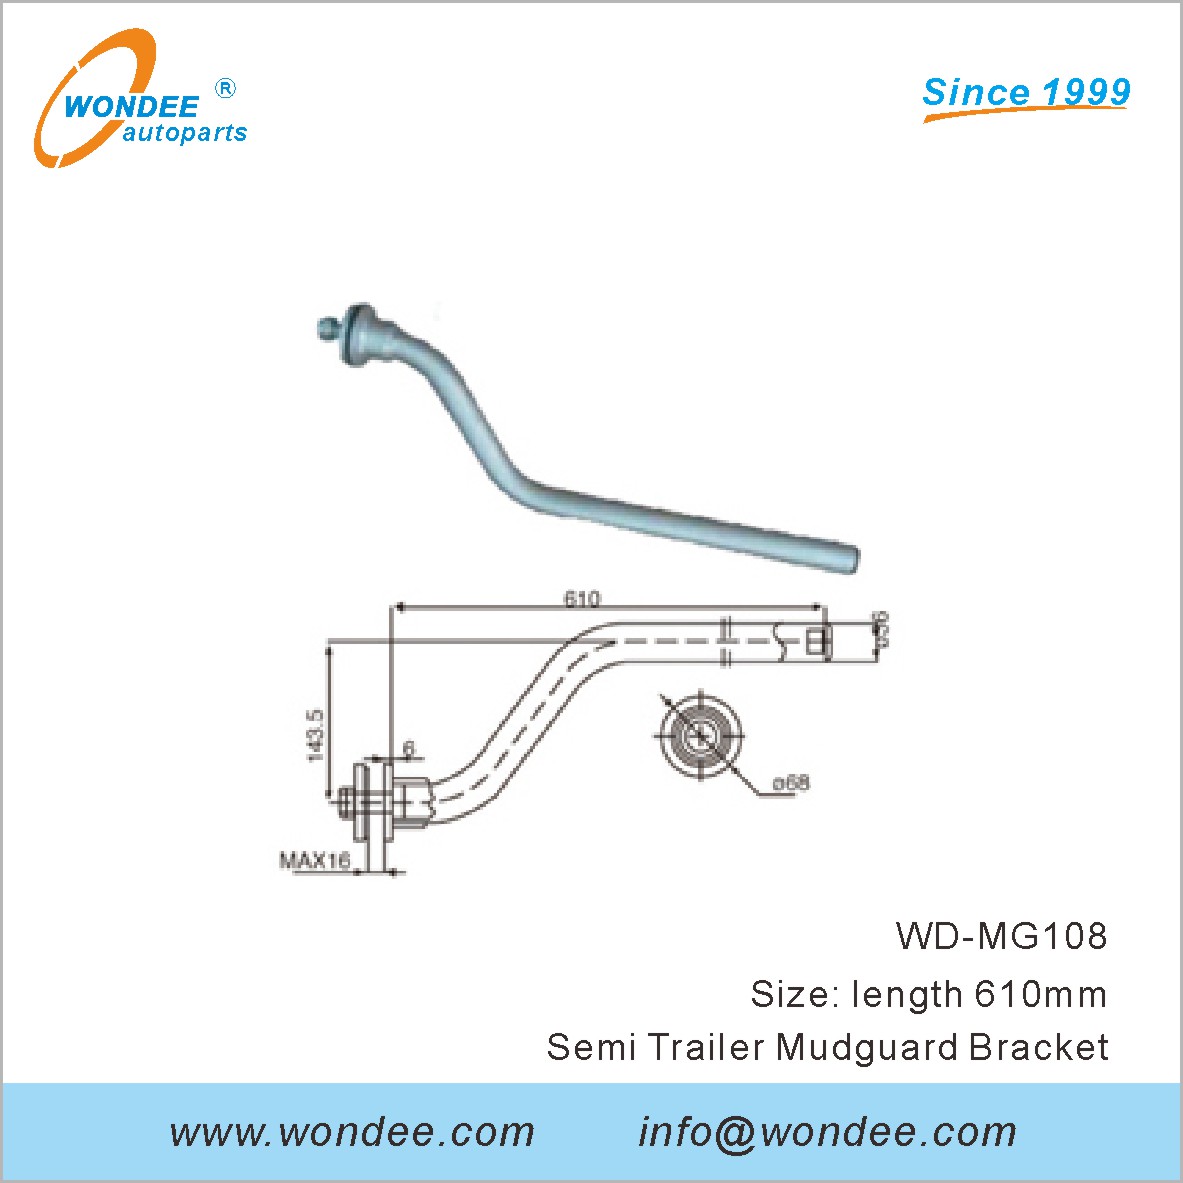 Mudguard bracket from WONDEE Autoparts (8)